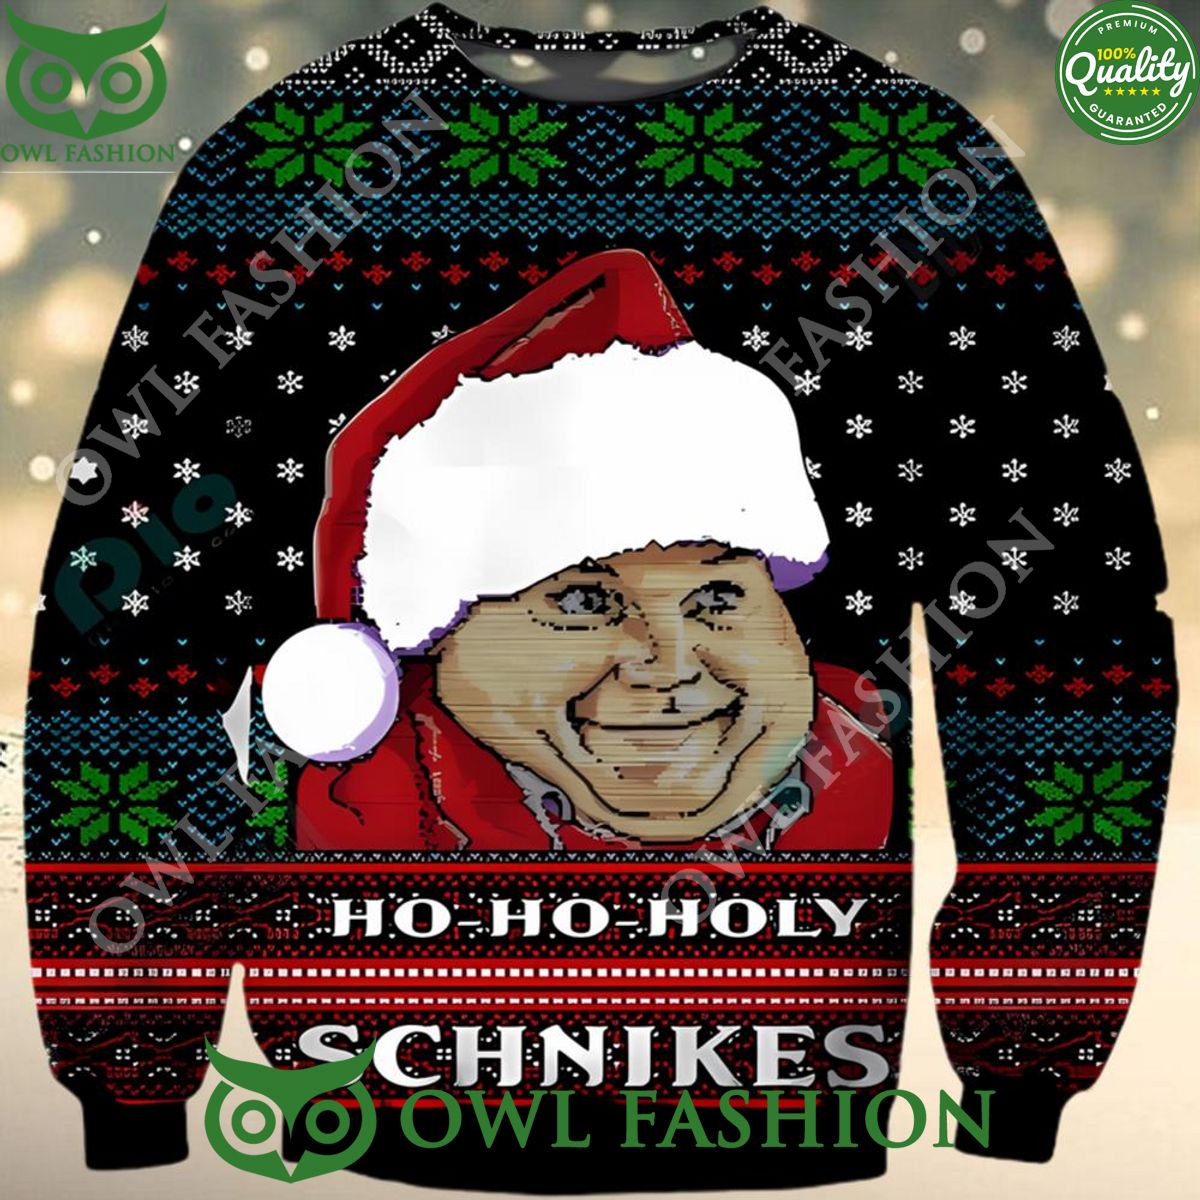 santa chris farley ho holy schnikes dirty ugly christmas sweater jumper 1 yOUzk.jpg